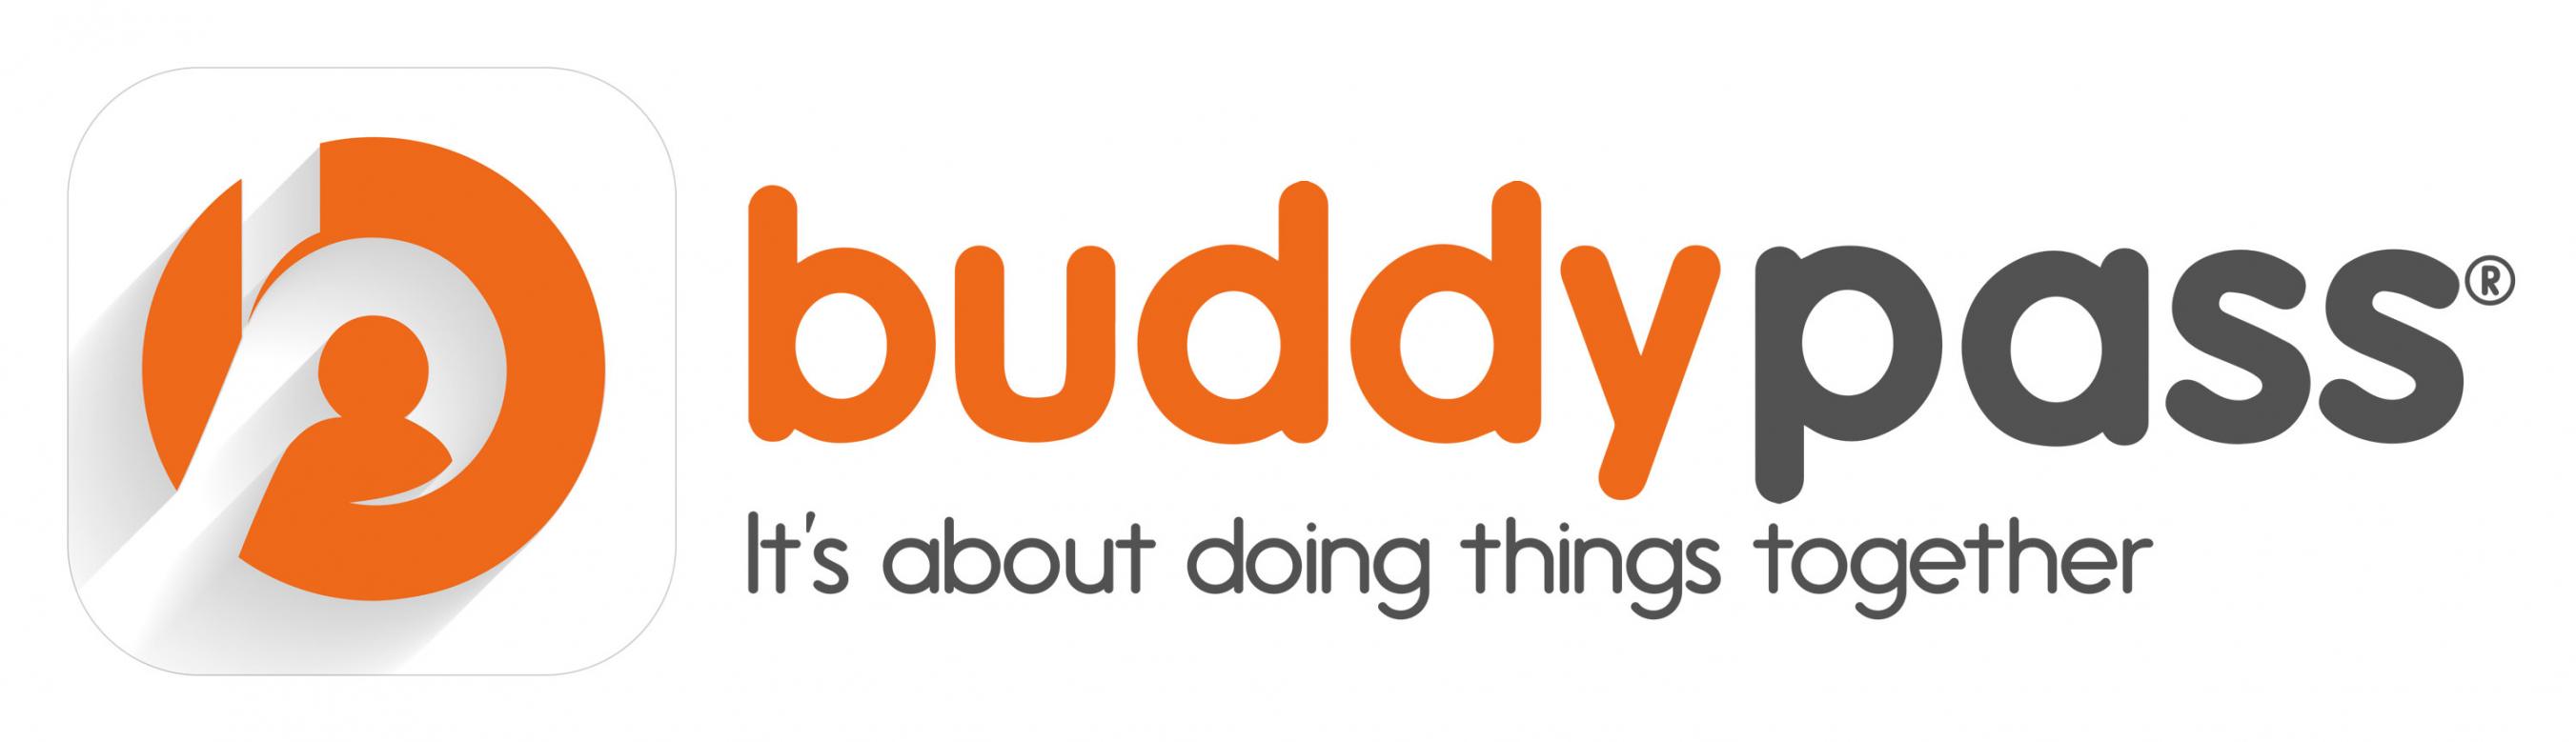 Buddypass Logo